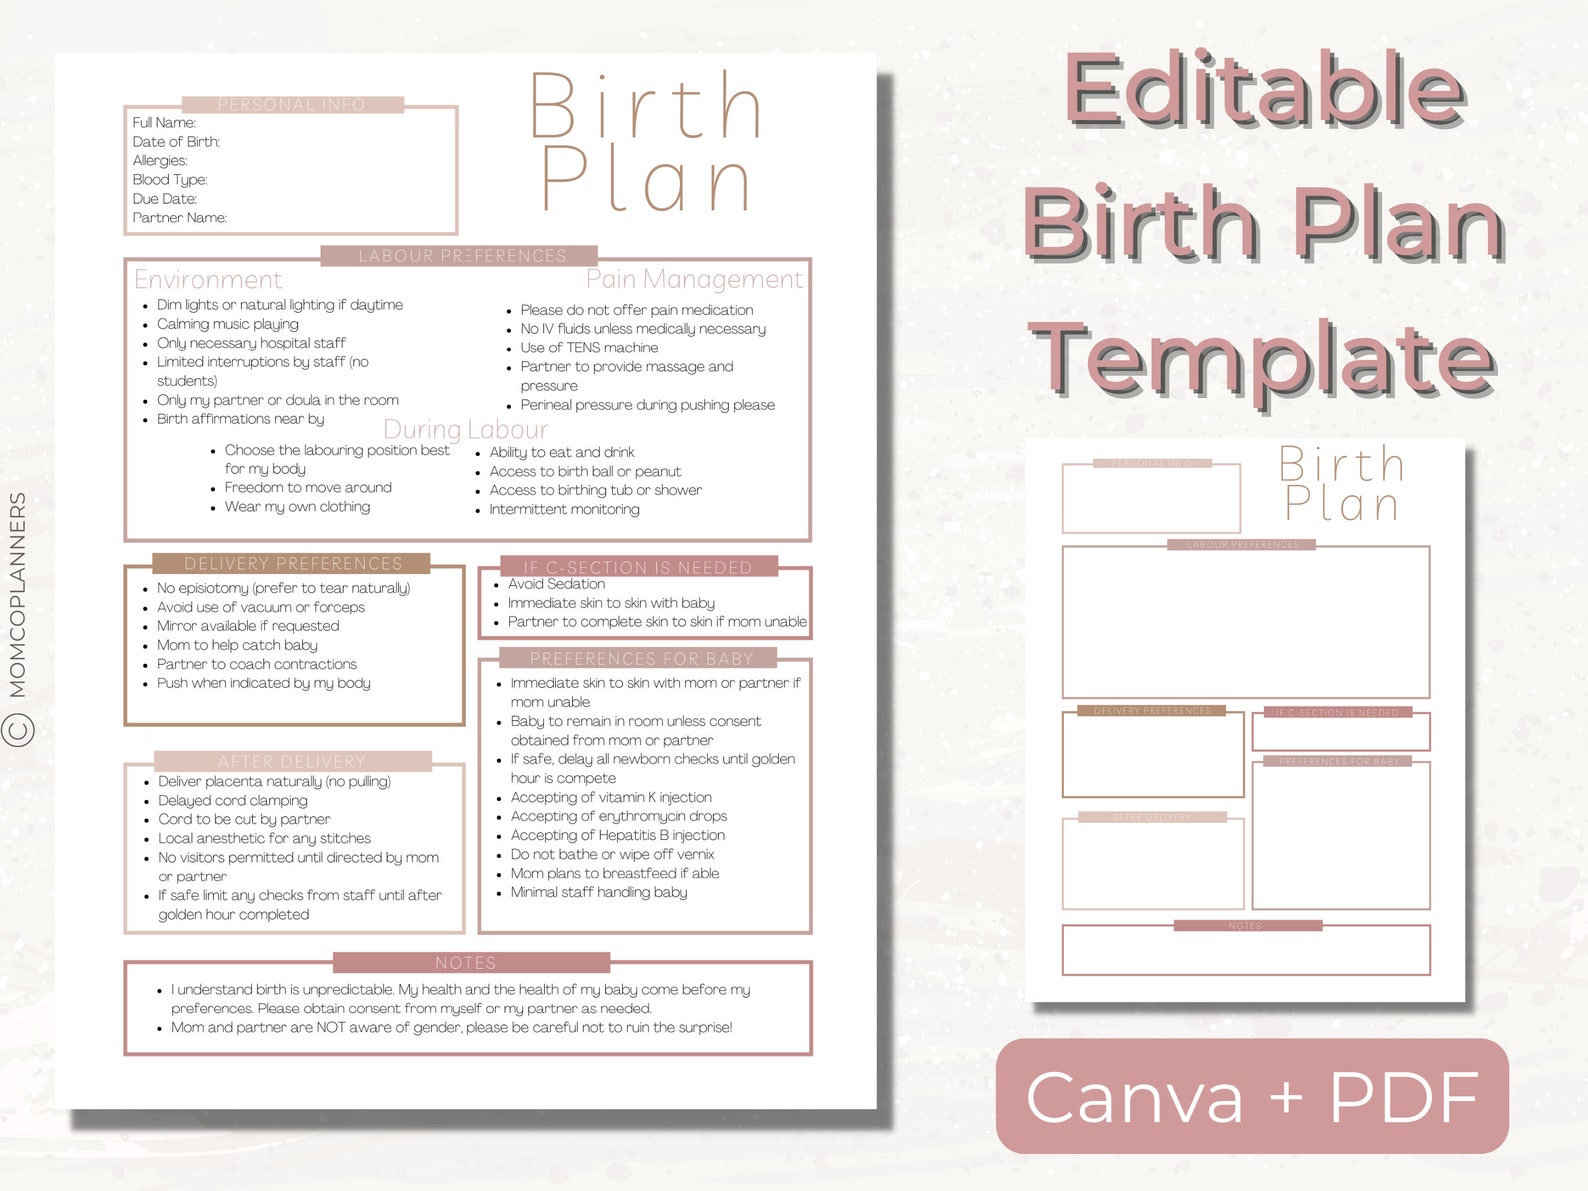 Birth Plan Canva Template Editable Birthing Plan Labour - Etsy Canada